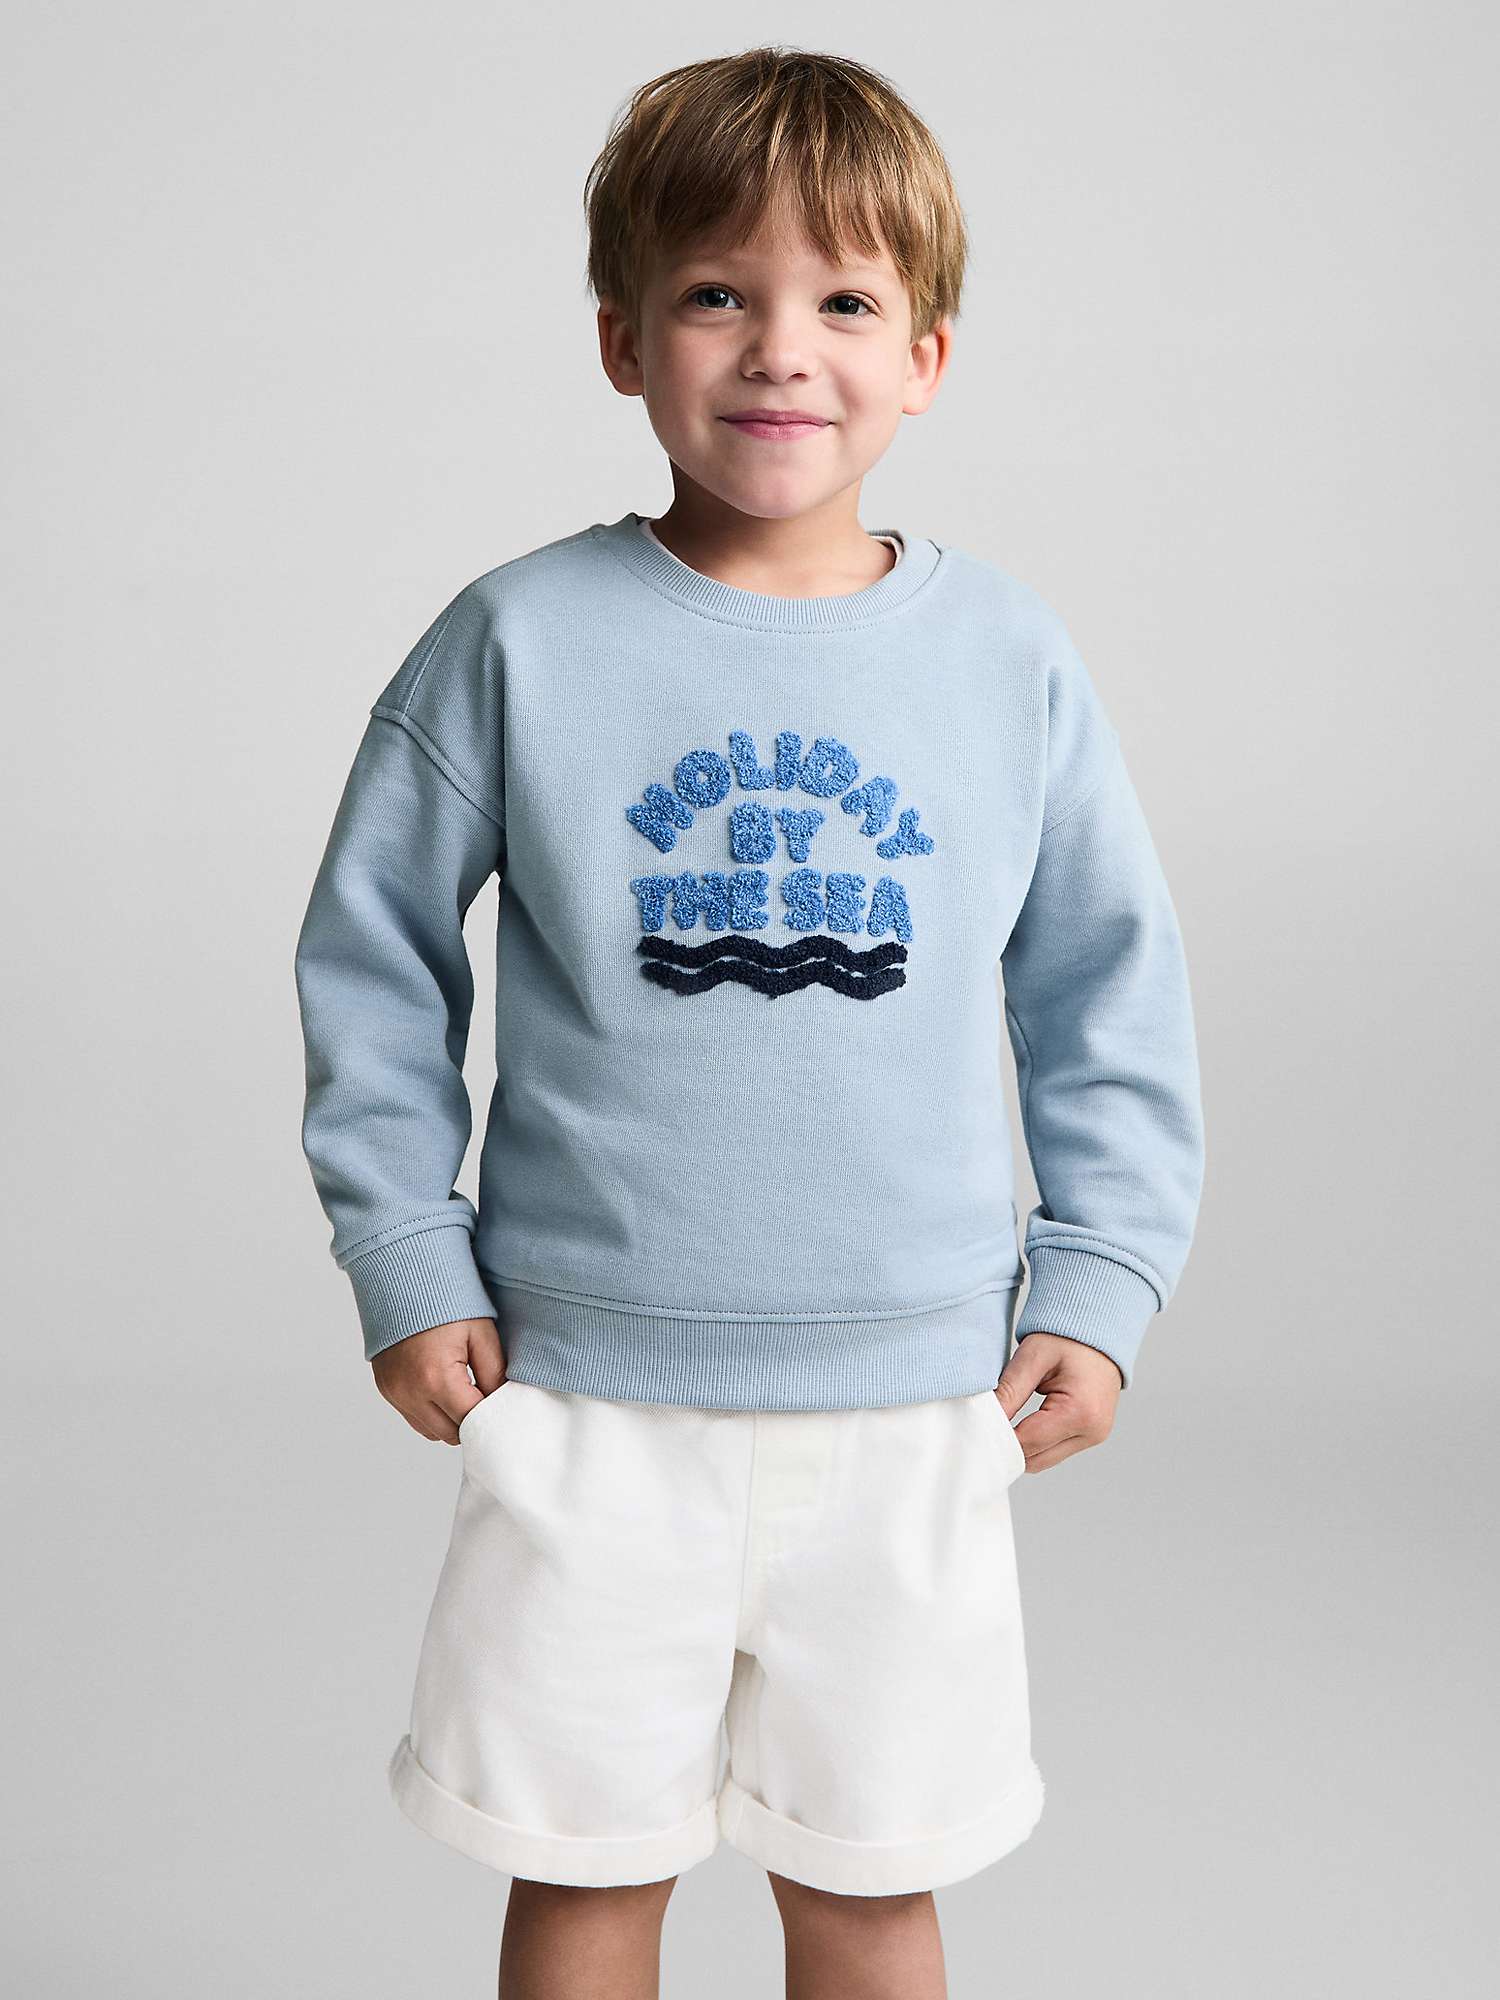 Buy Mango Baby The Sea Sweatshirt, Light Pastel Blue Online at johnlewis.com